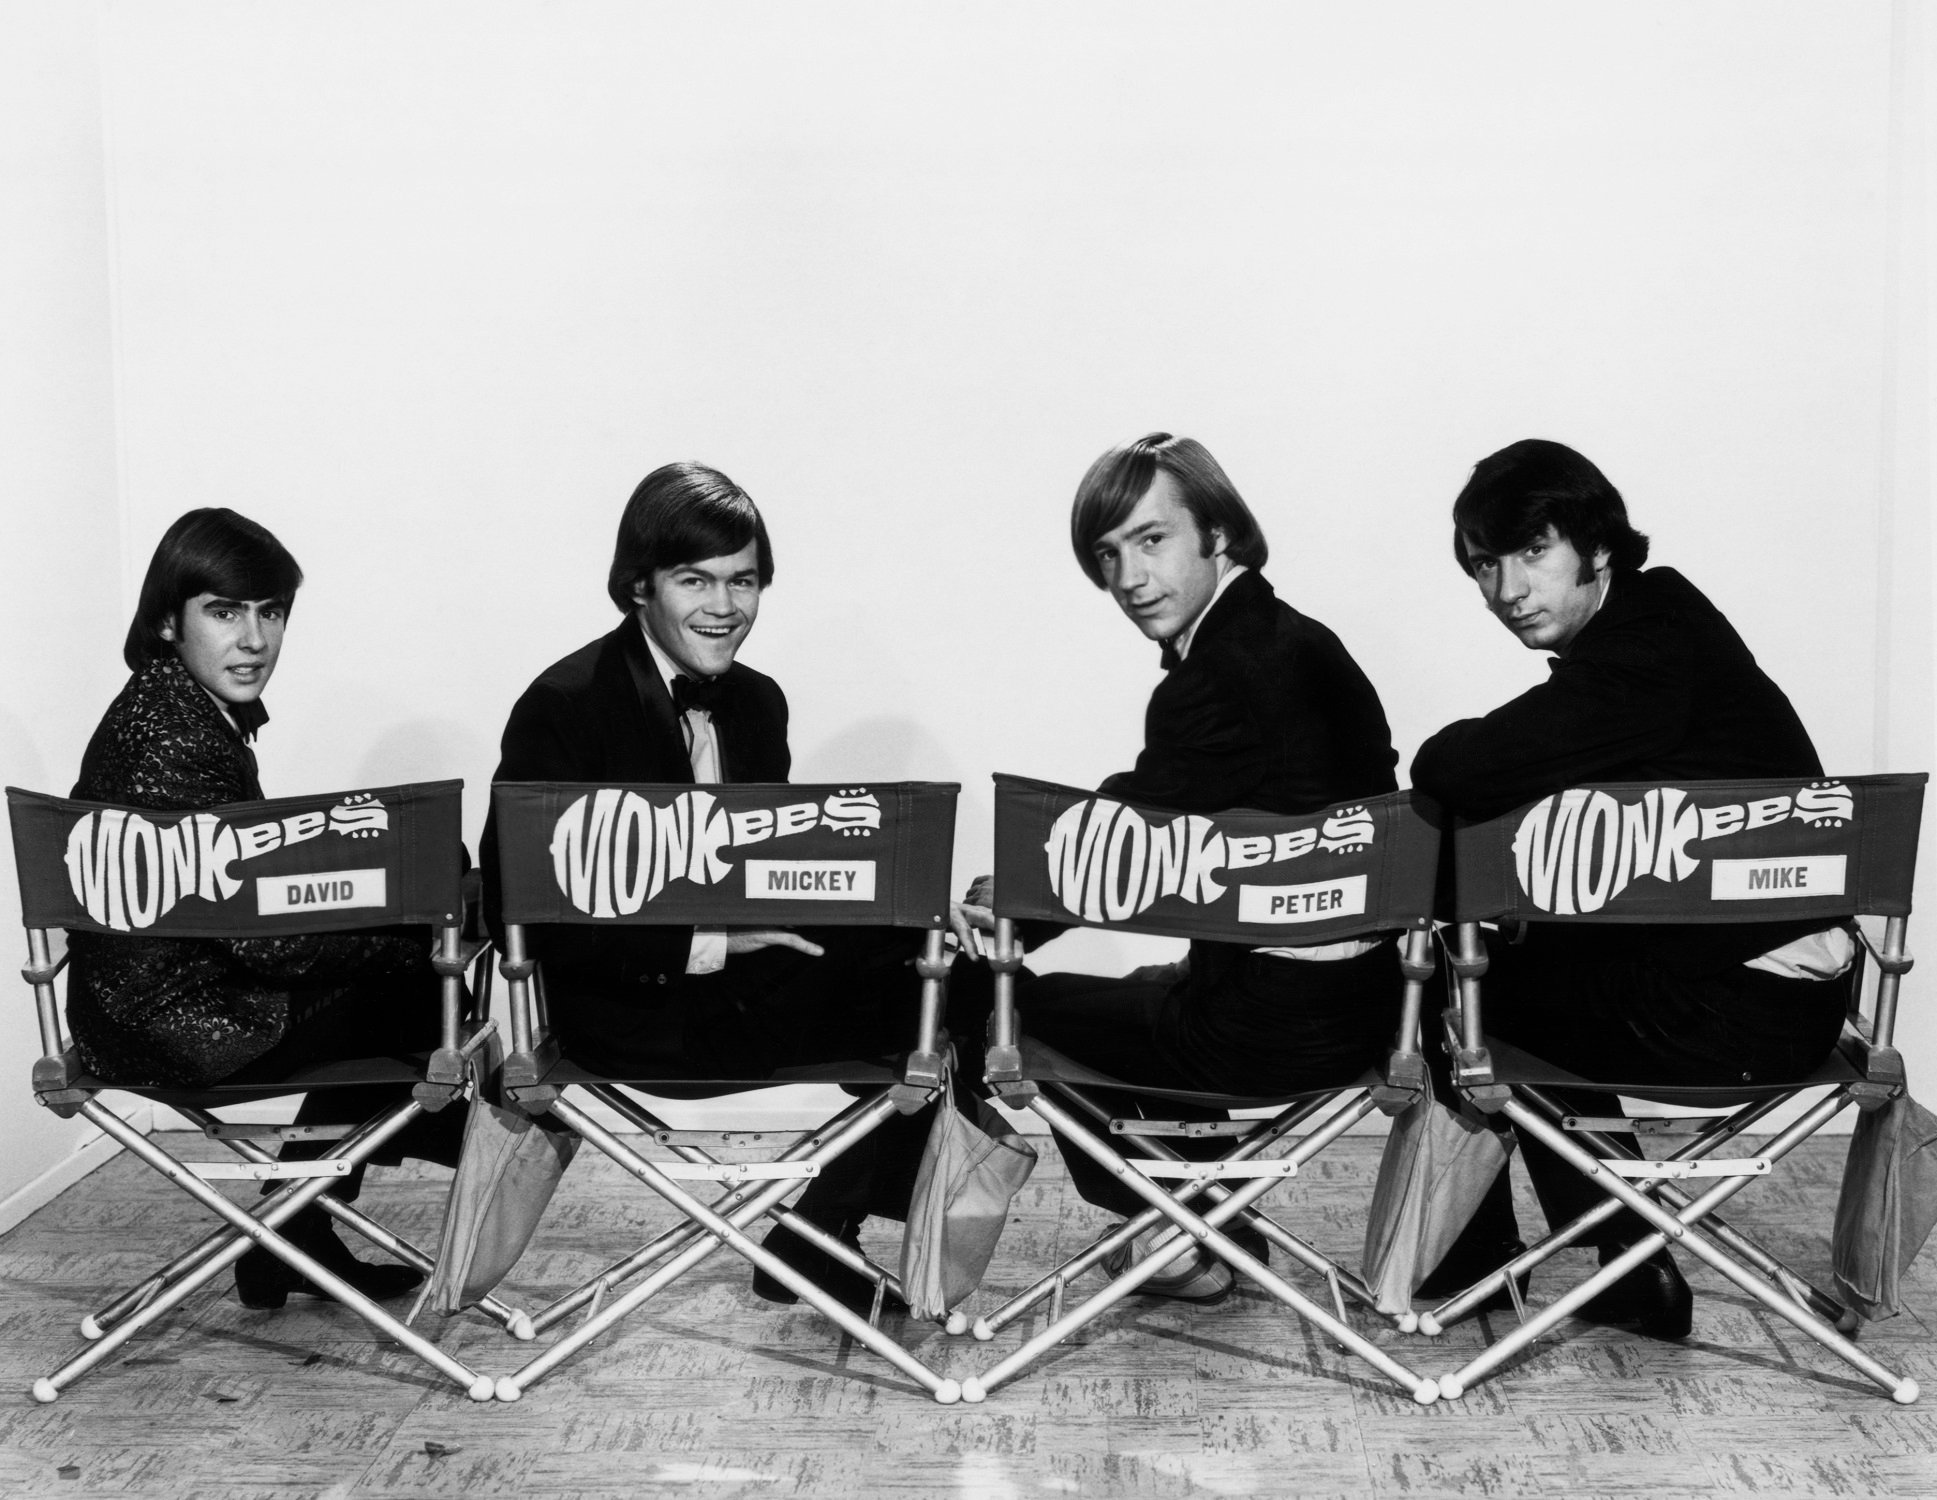 David Jones, Mickey Dolenz, Peter Tork and Michael Nesmith of the Monkees